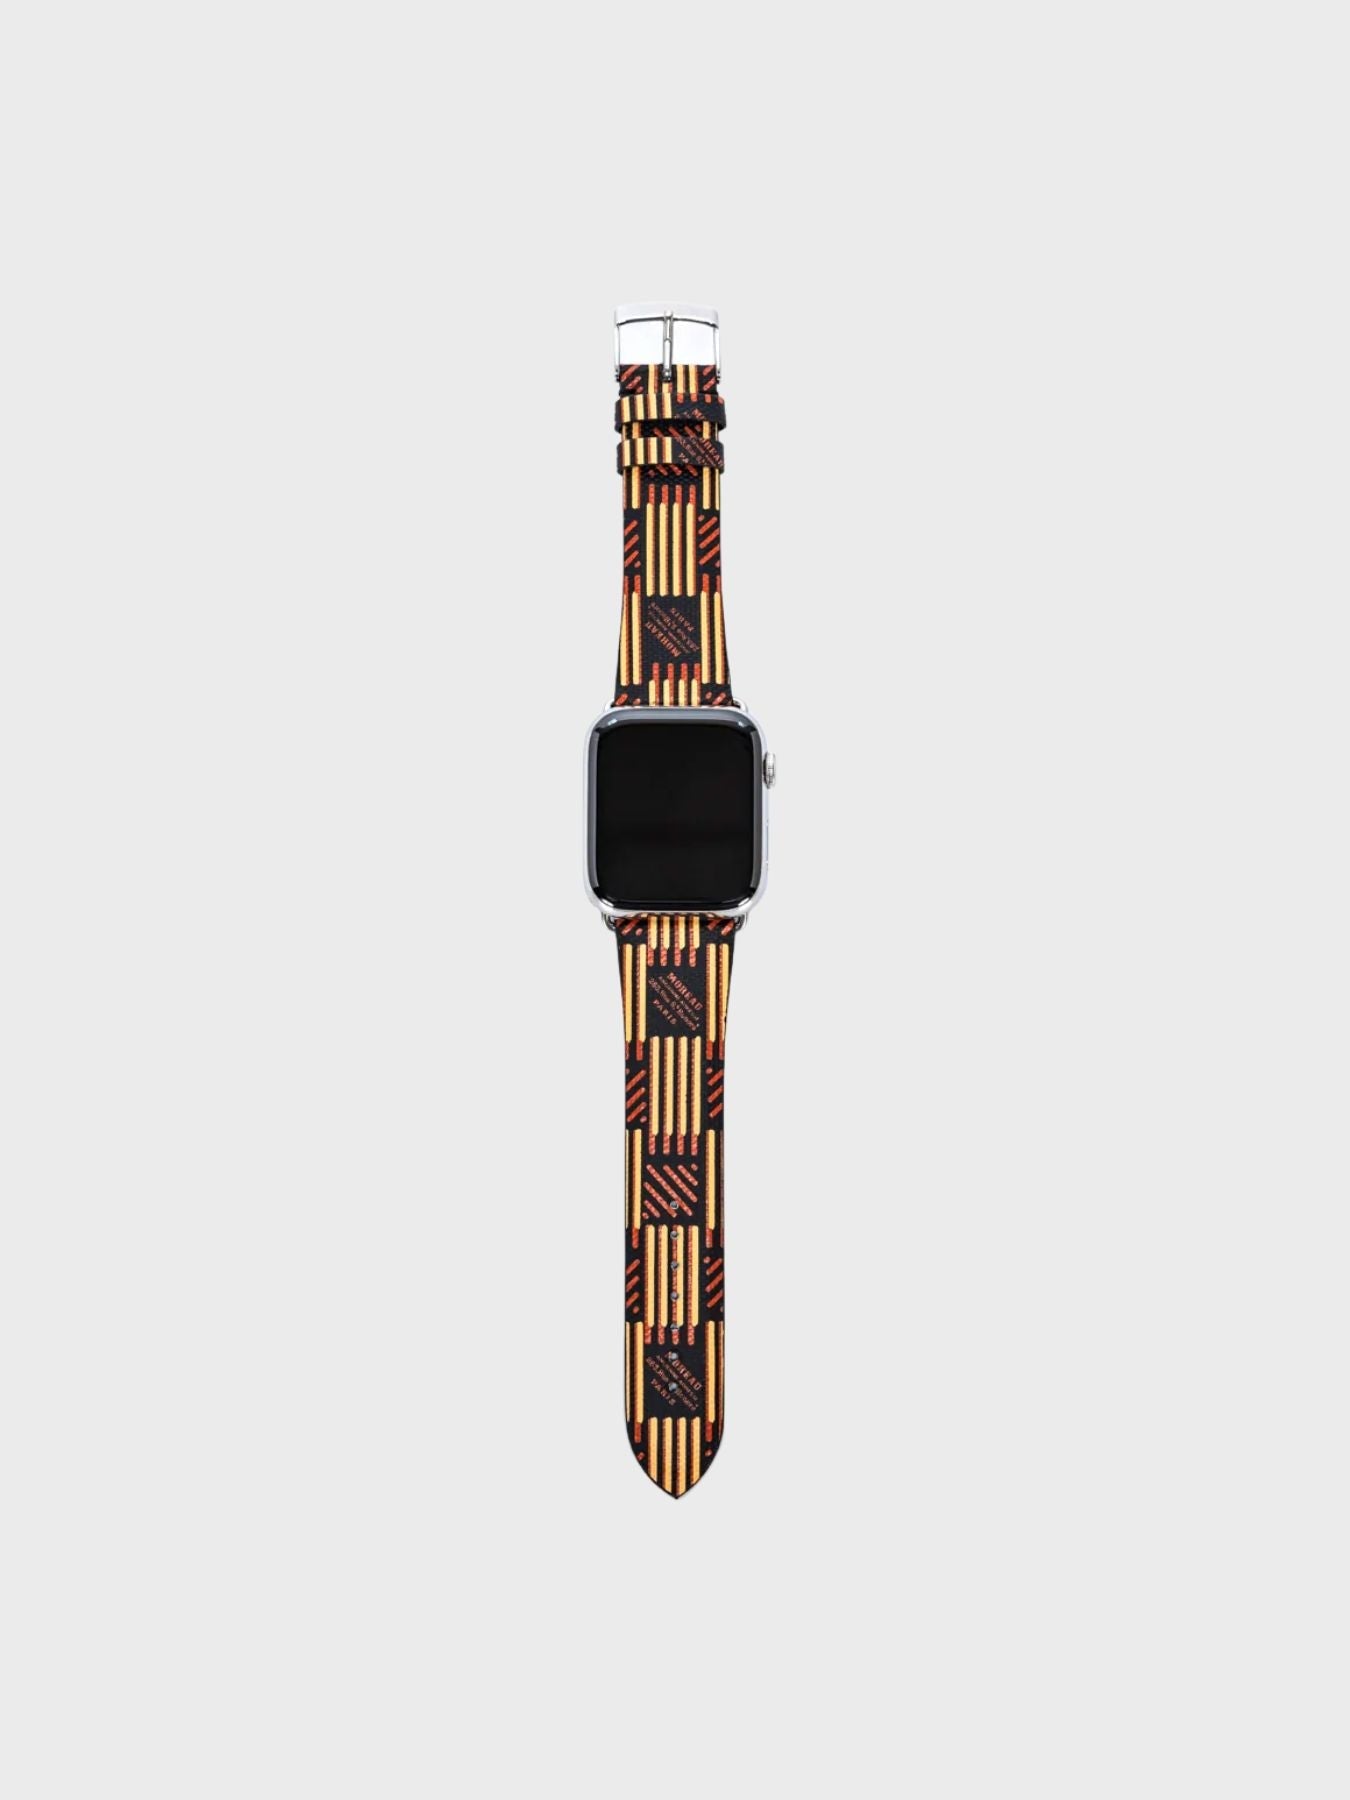 Apple Watch Band Louis Vuitton -  Canada